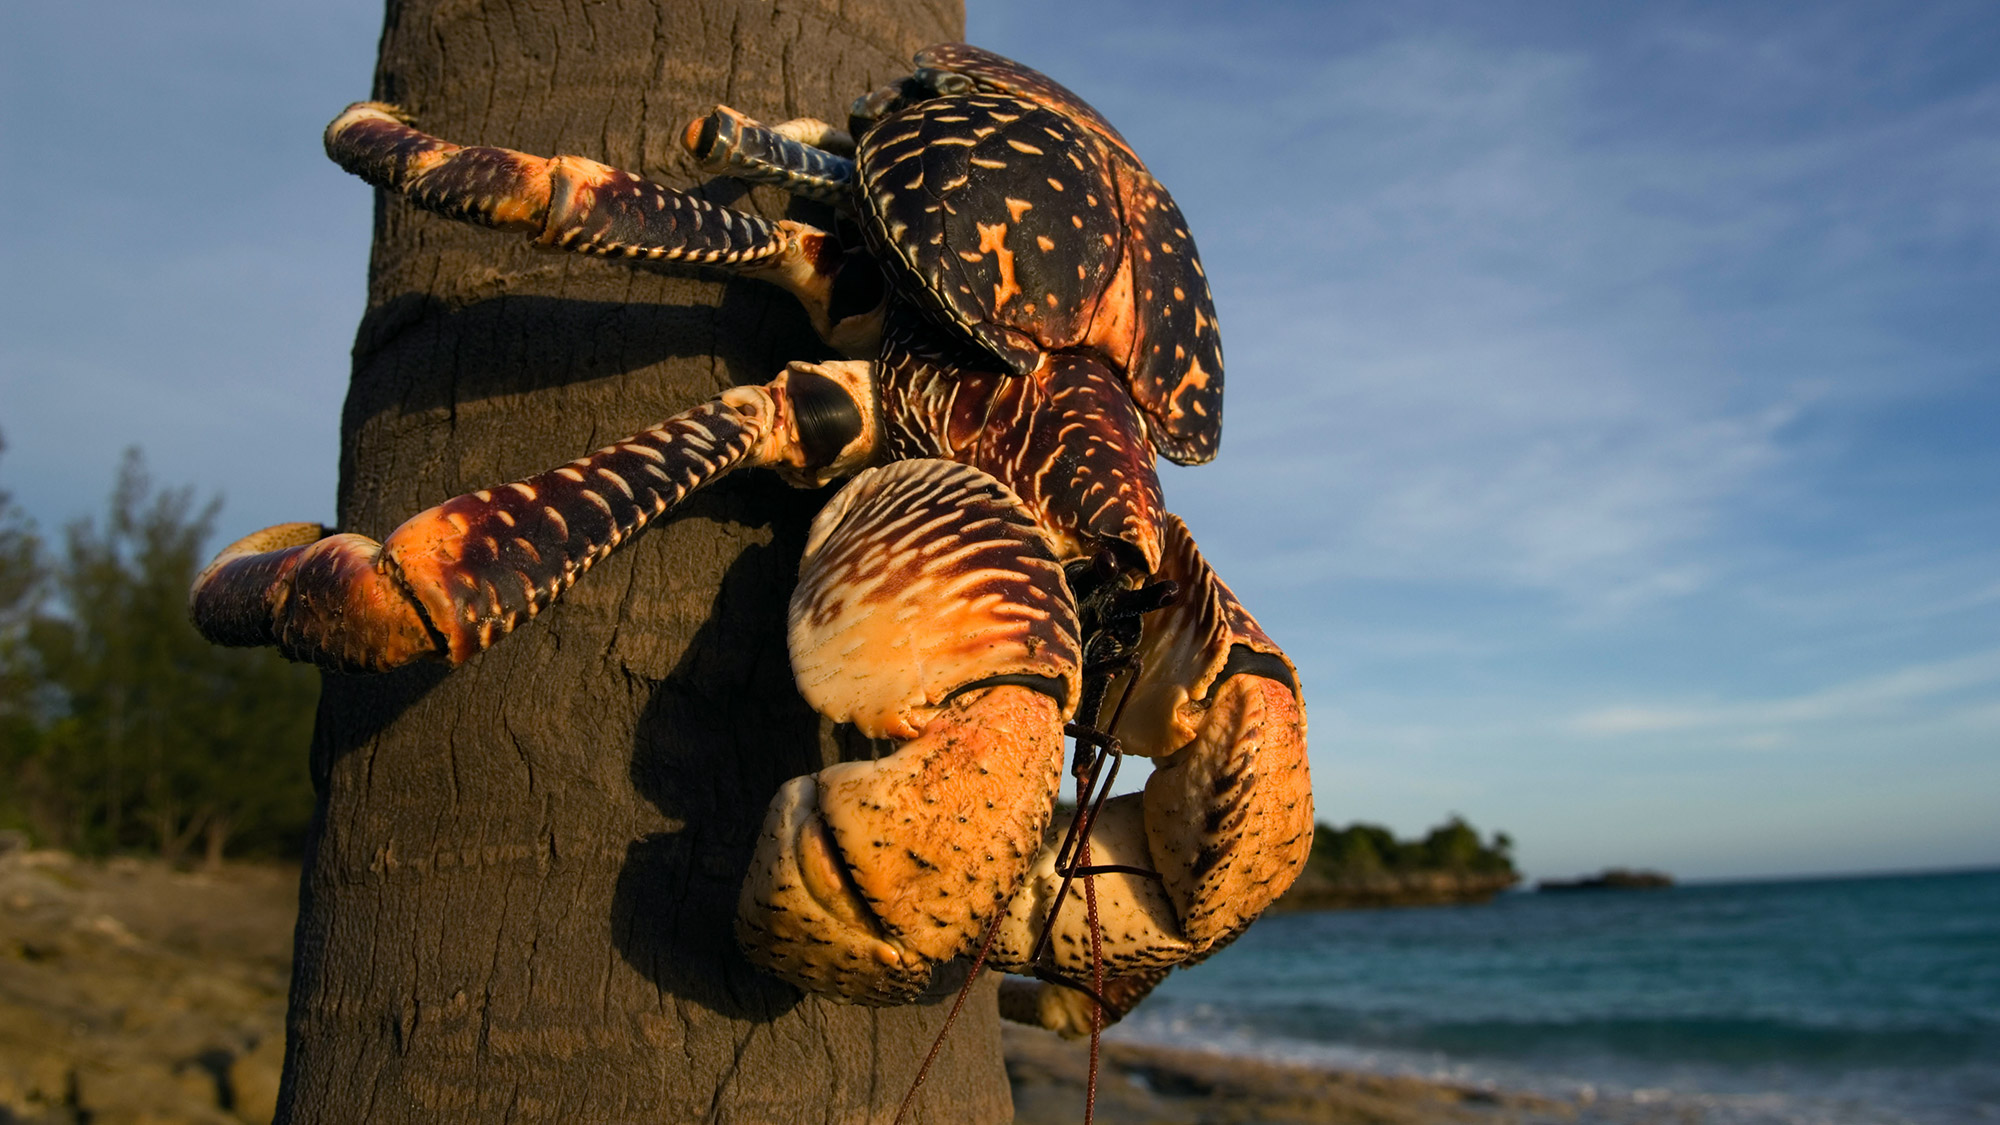 giant coconut crabs edible